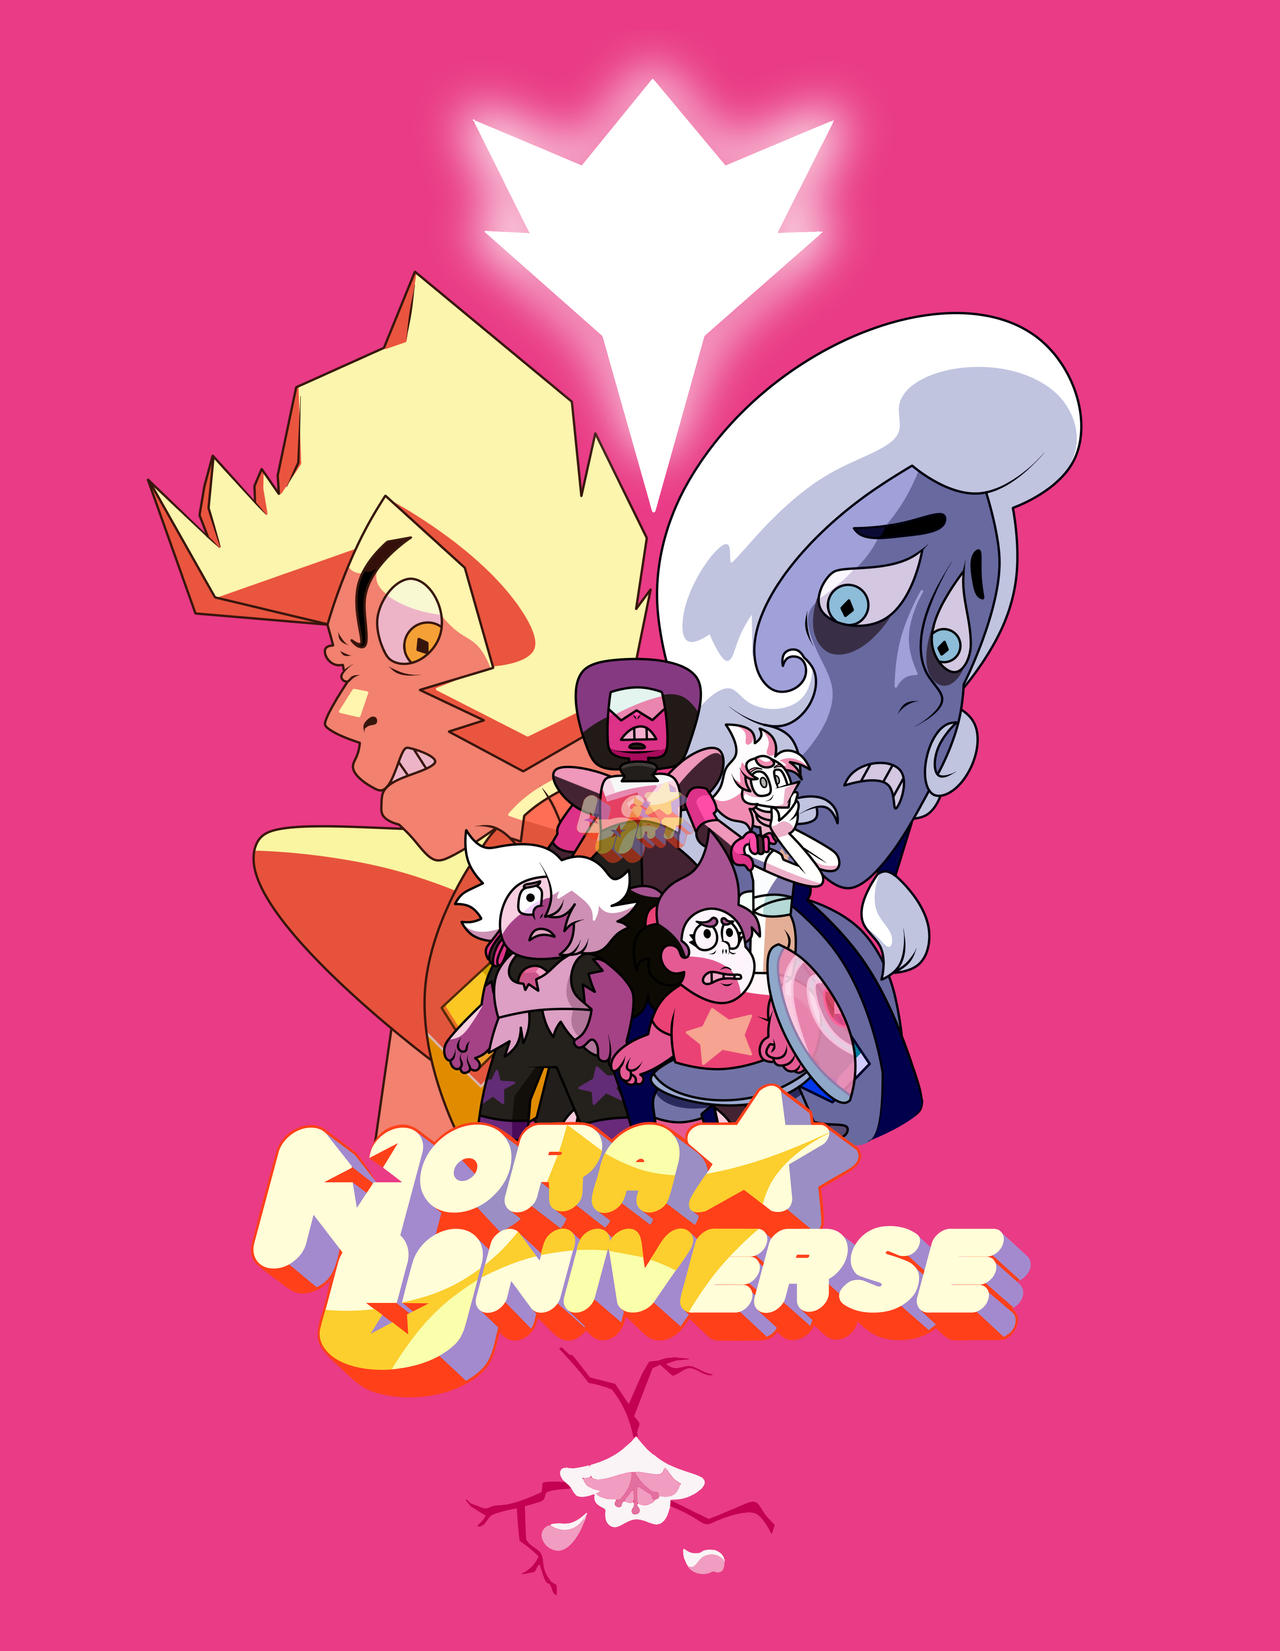 Steven Universe 5ta Temporada Poster by Lg2021art on DeviantArt